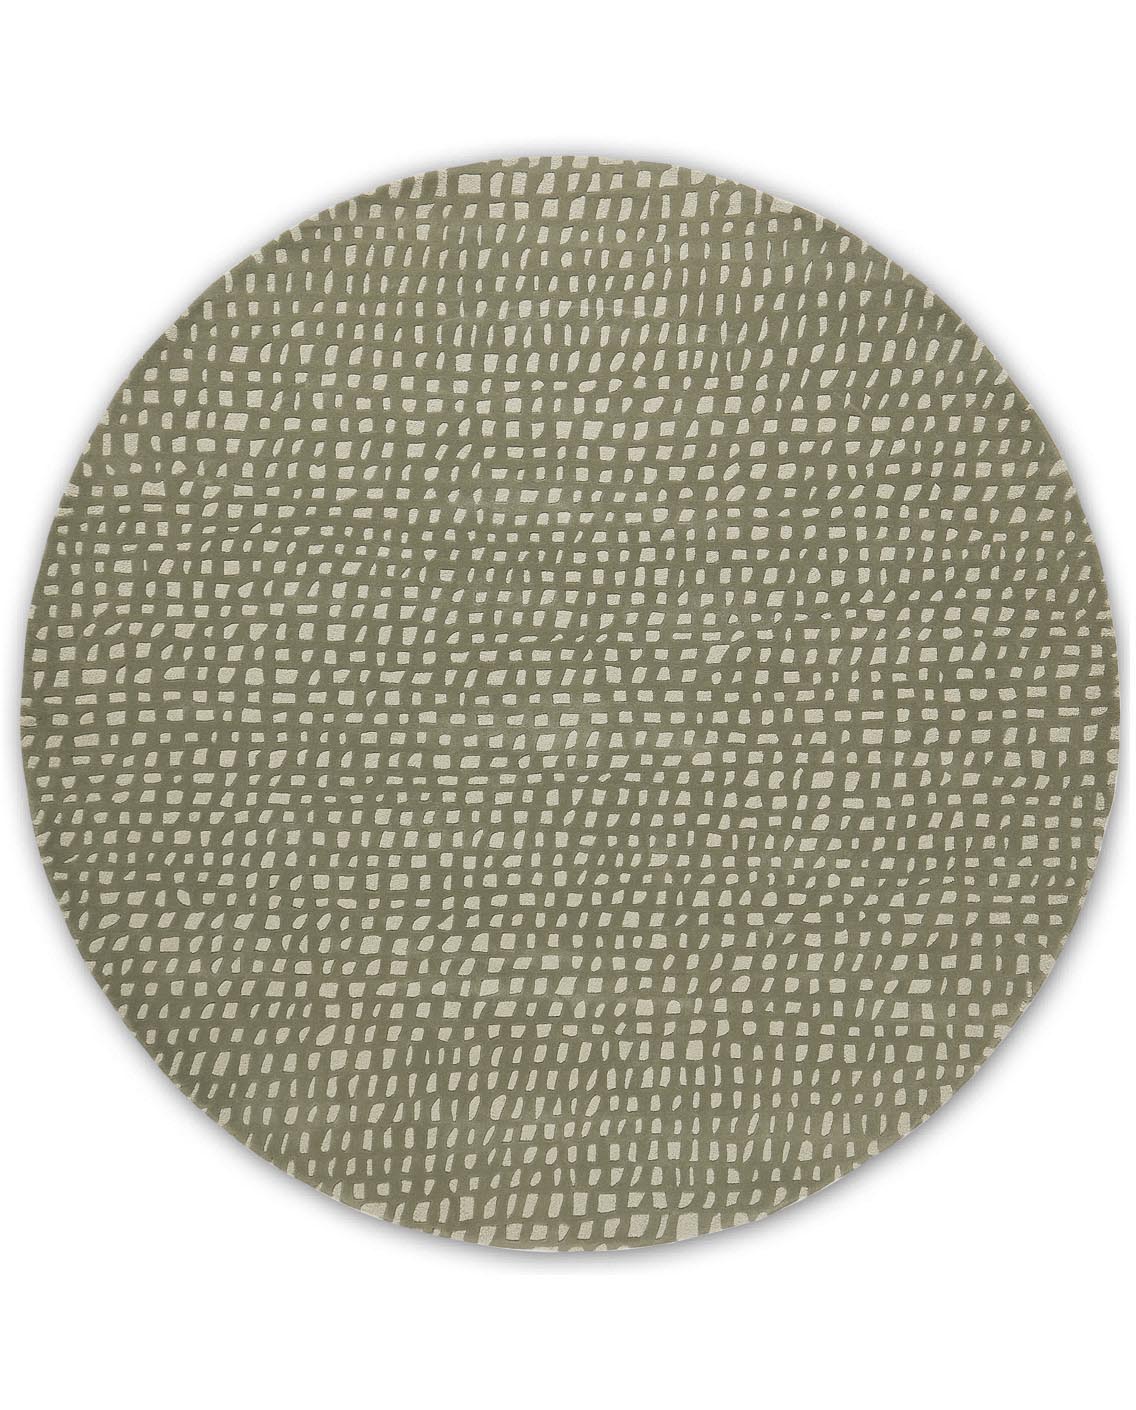 angela adams Fish Net Steelhead contemporary modern rug